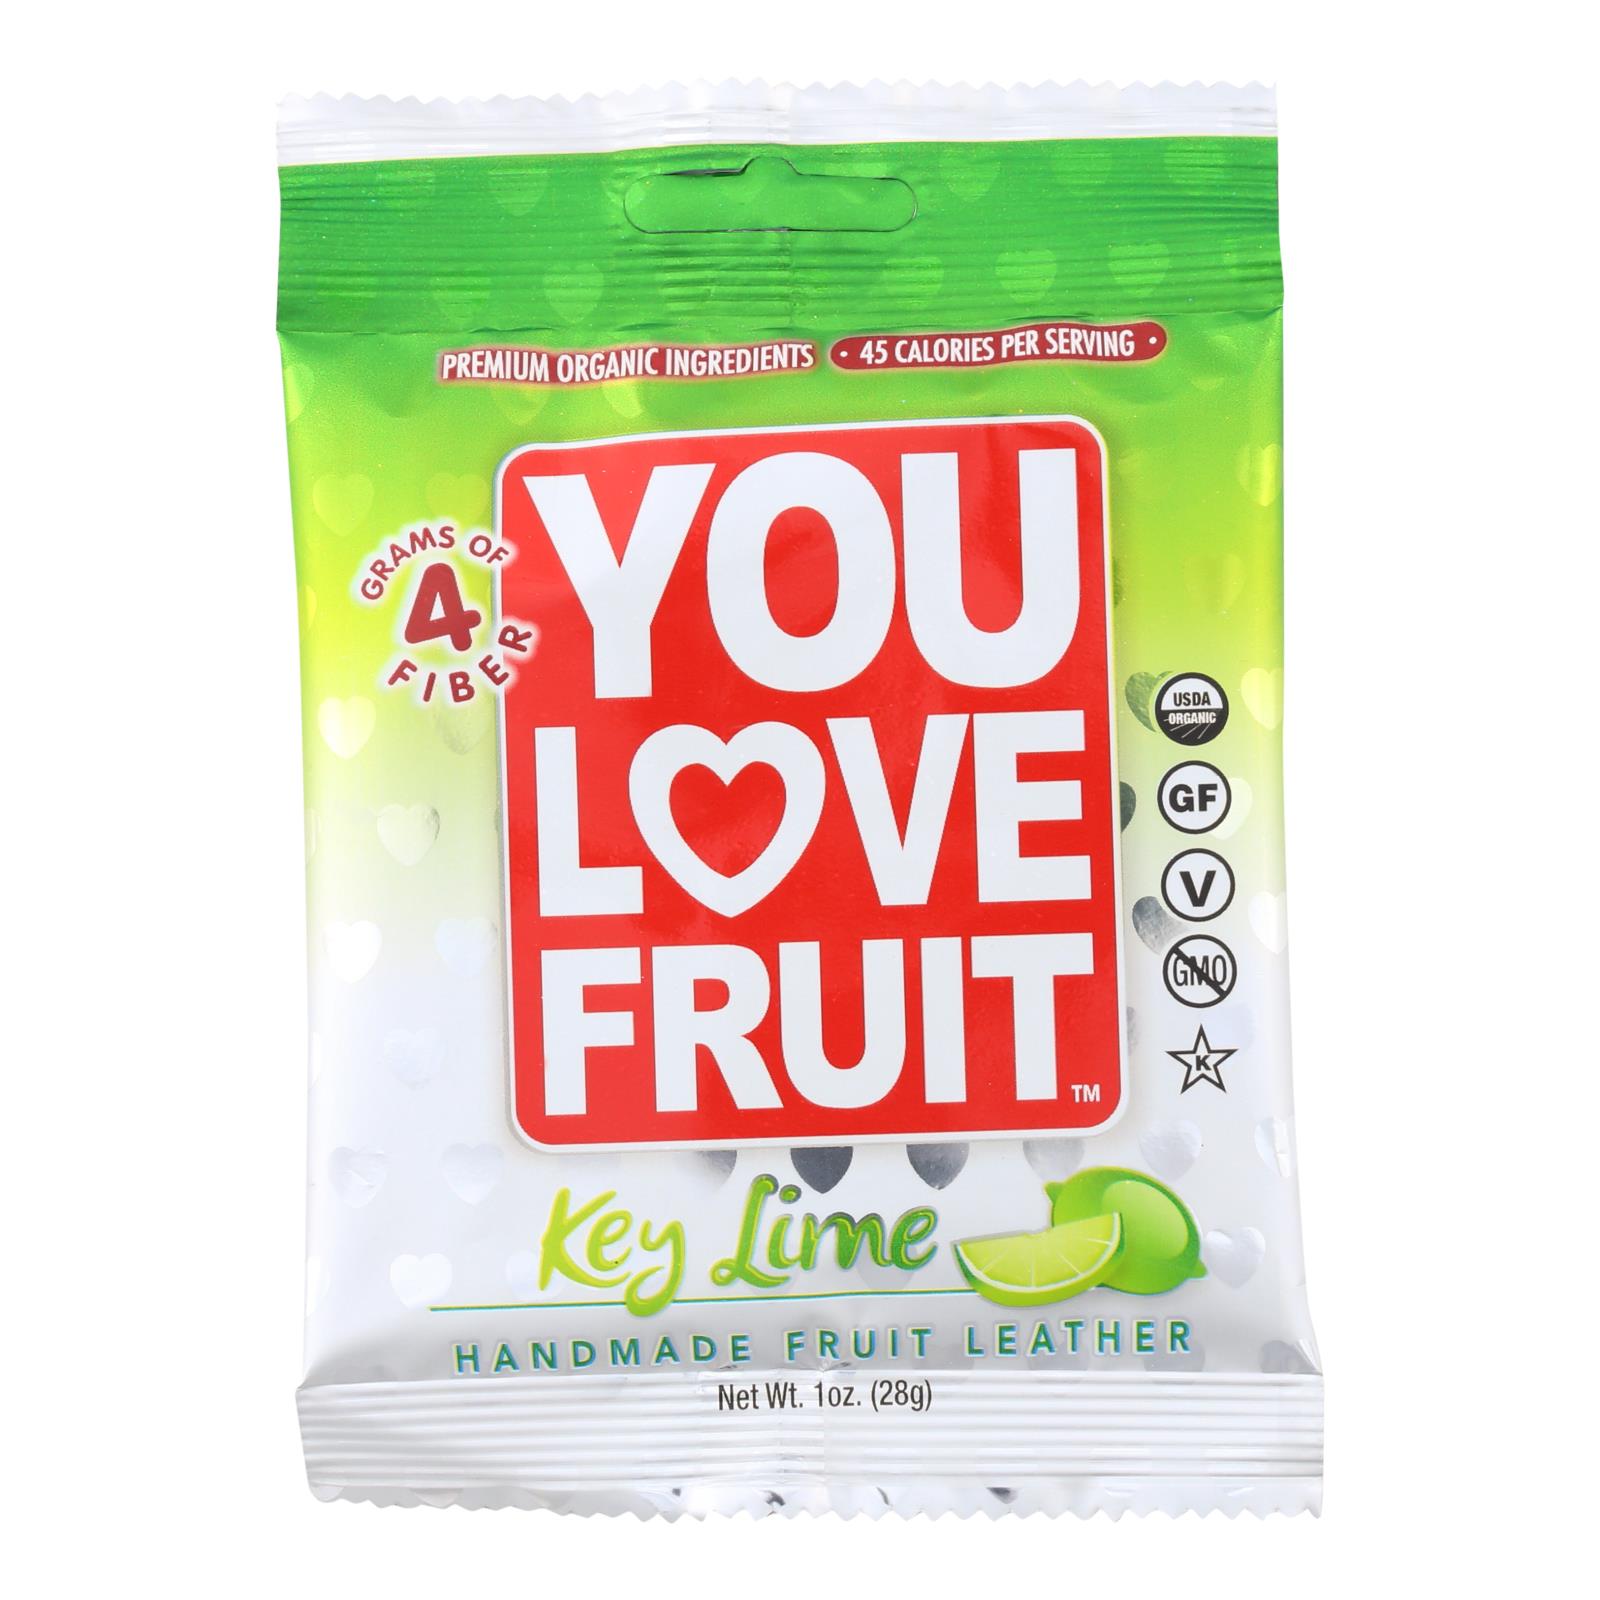 You Love Fruit Key Lime Handmade Fruit Leather - Case of 12 - 1 OZ